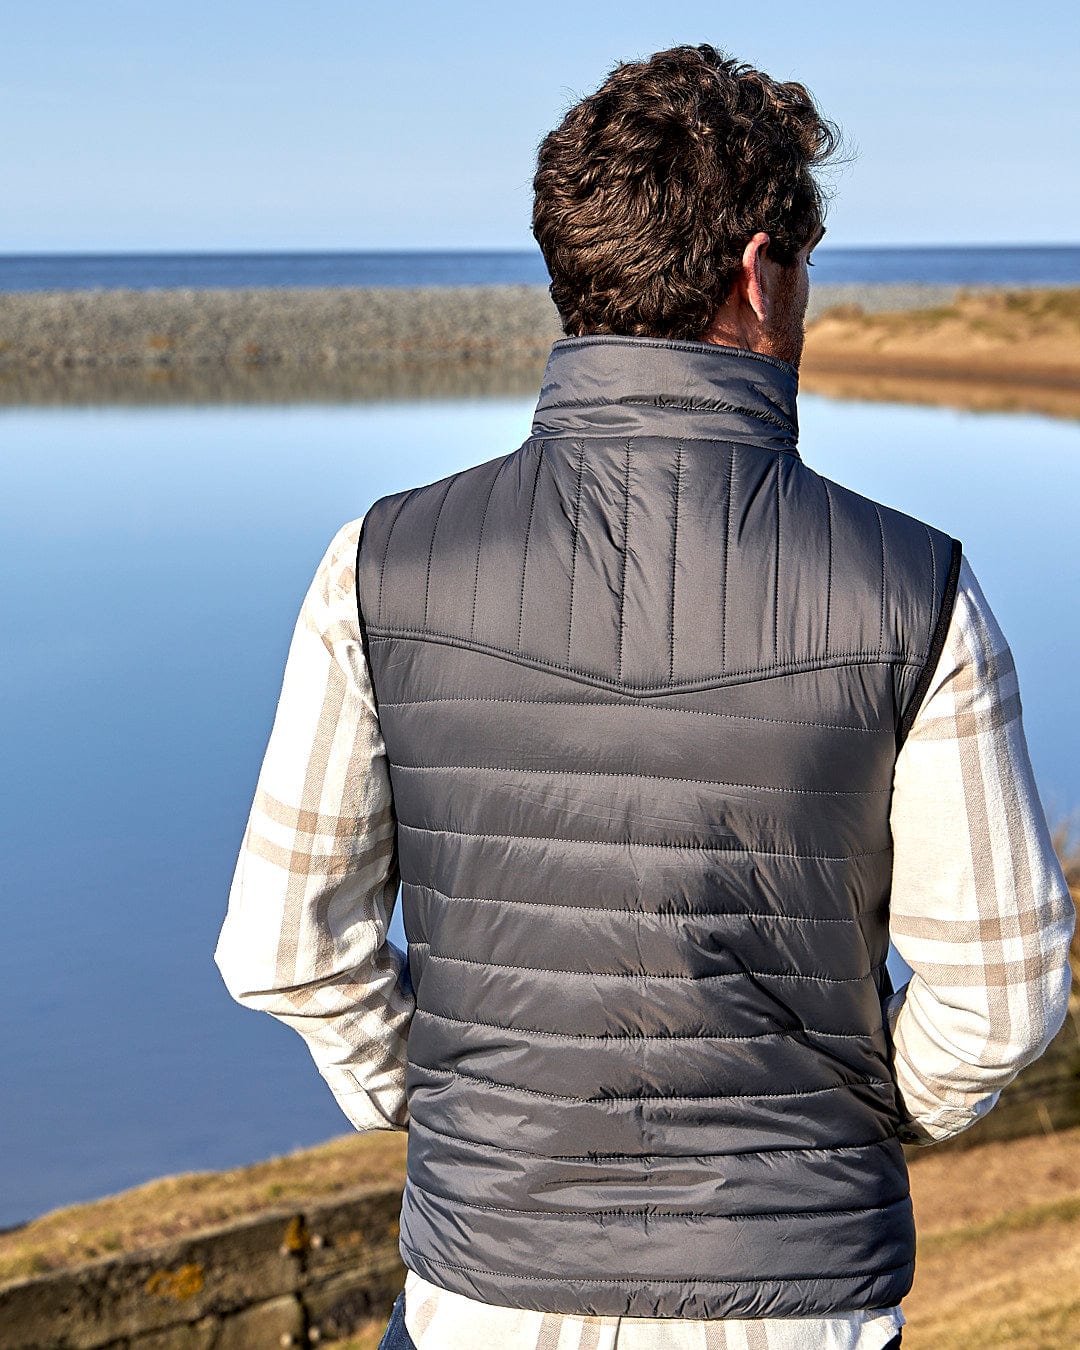 A man standing by a body of water wearing a Saltrock - Mens Reversible Gilet - Dark Green/Black vest.